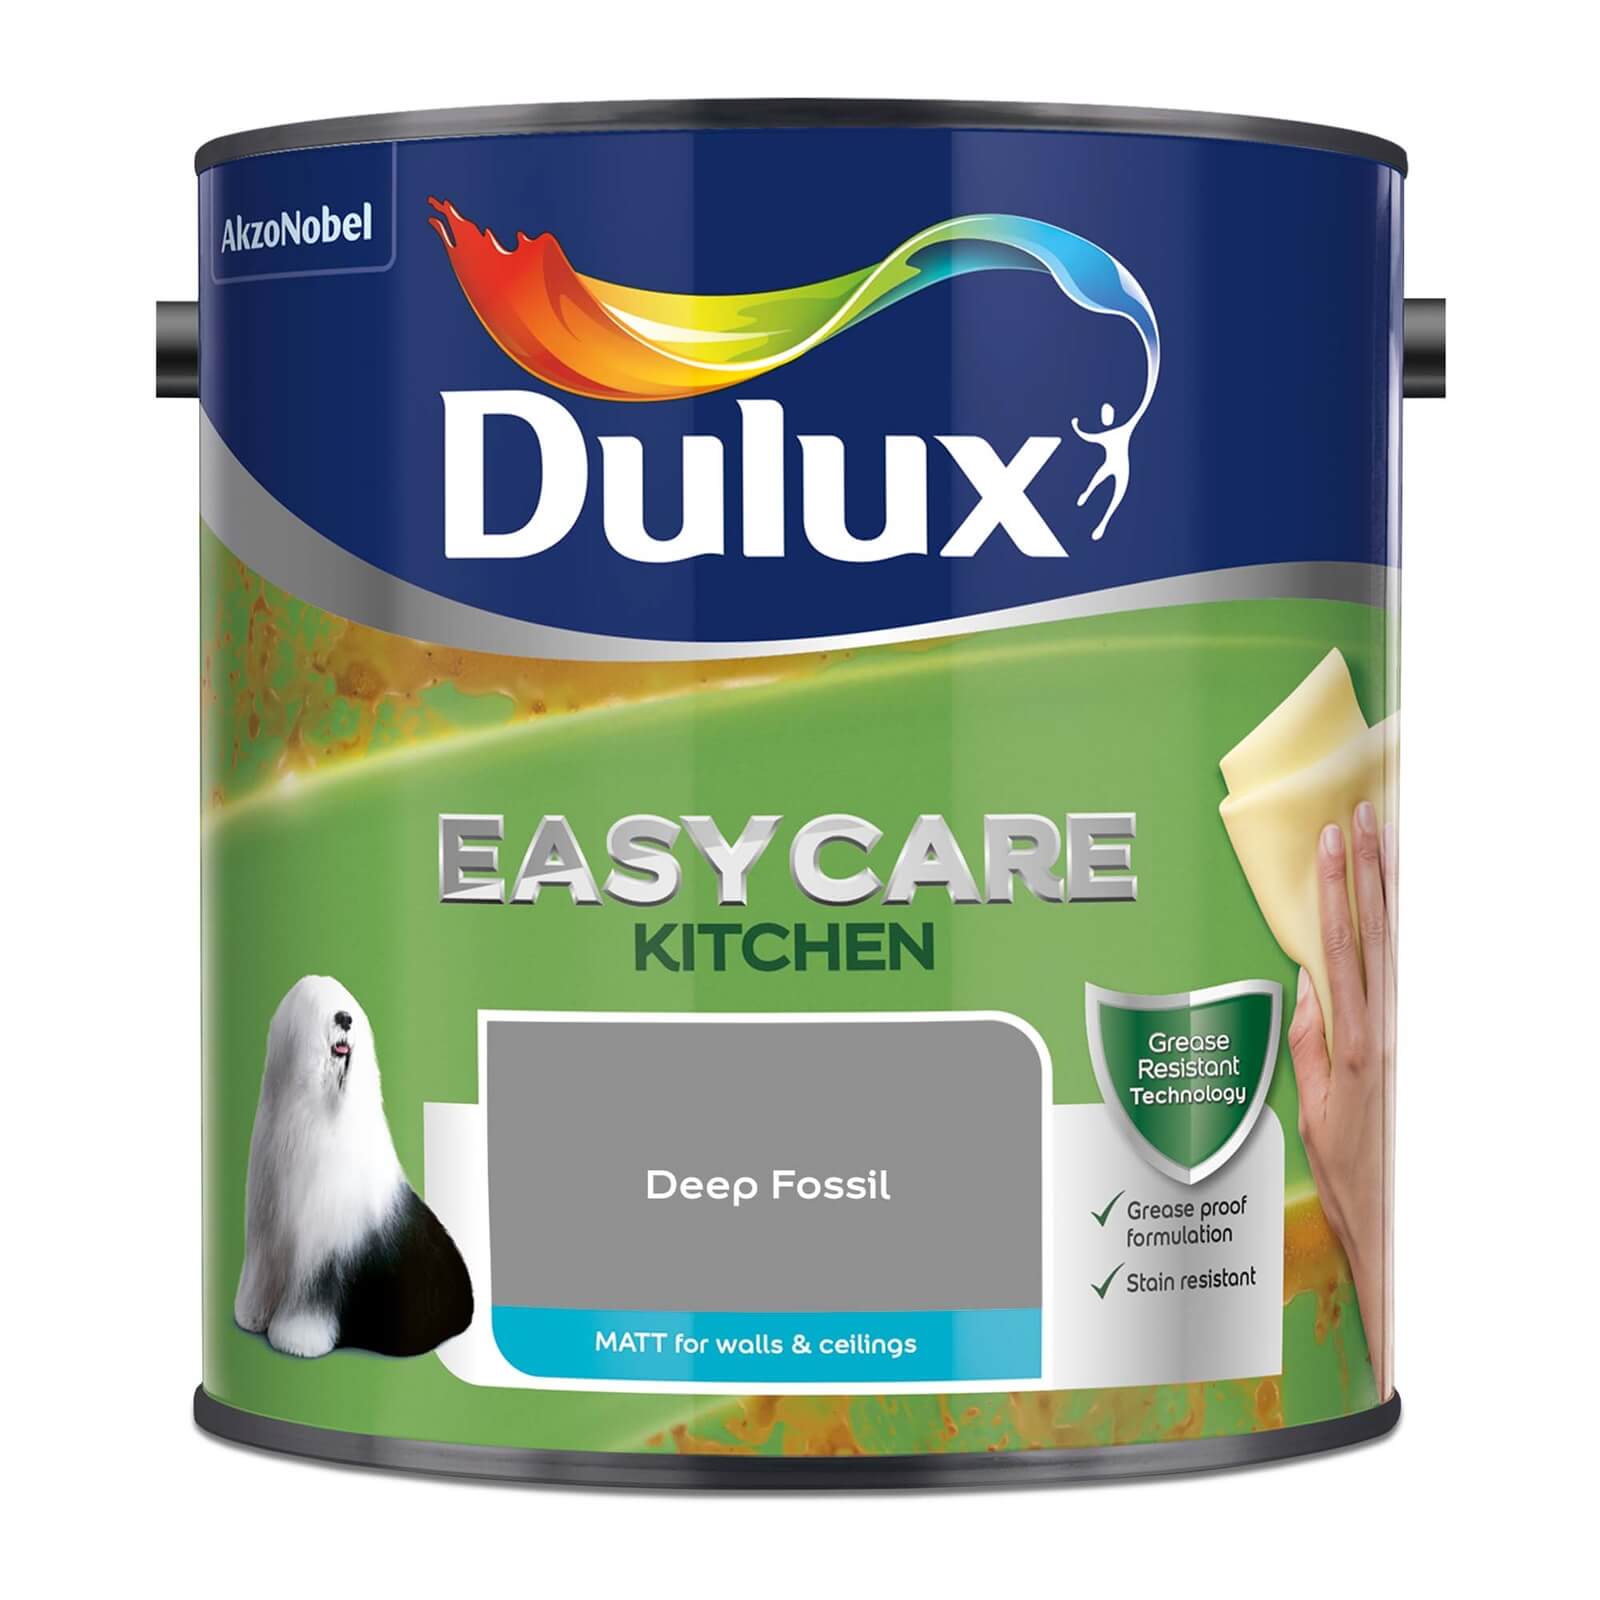 Dulux Easycare Kitchen Deep Fossil Matt Paint - 2.5L